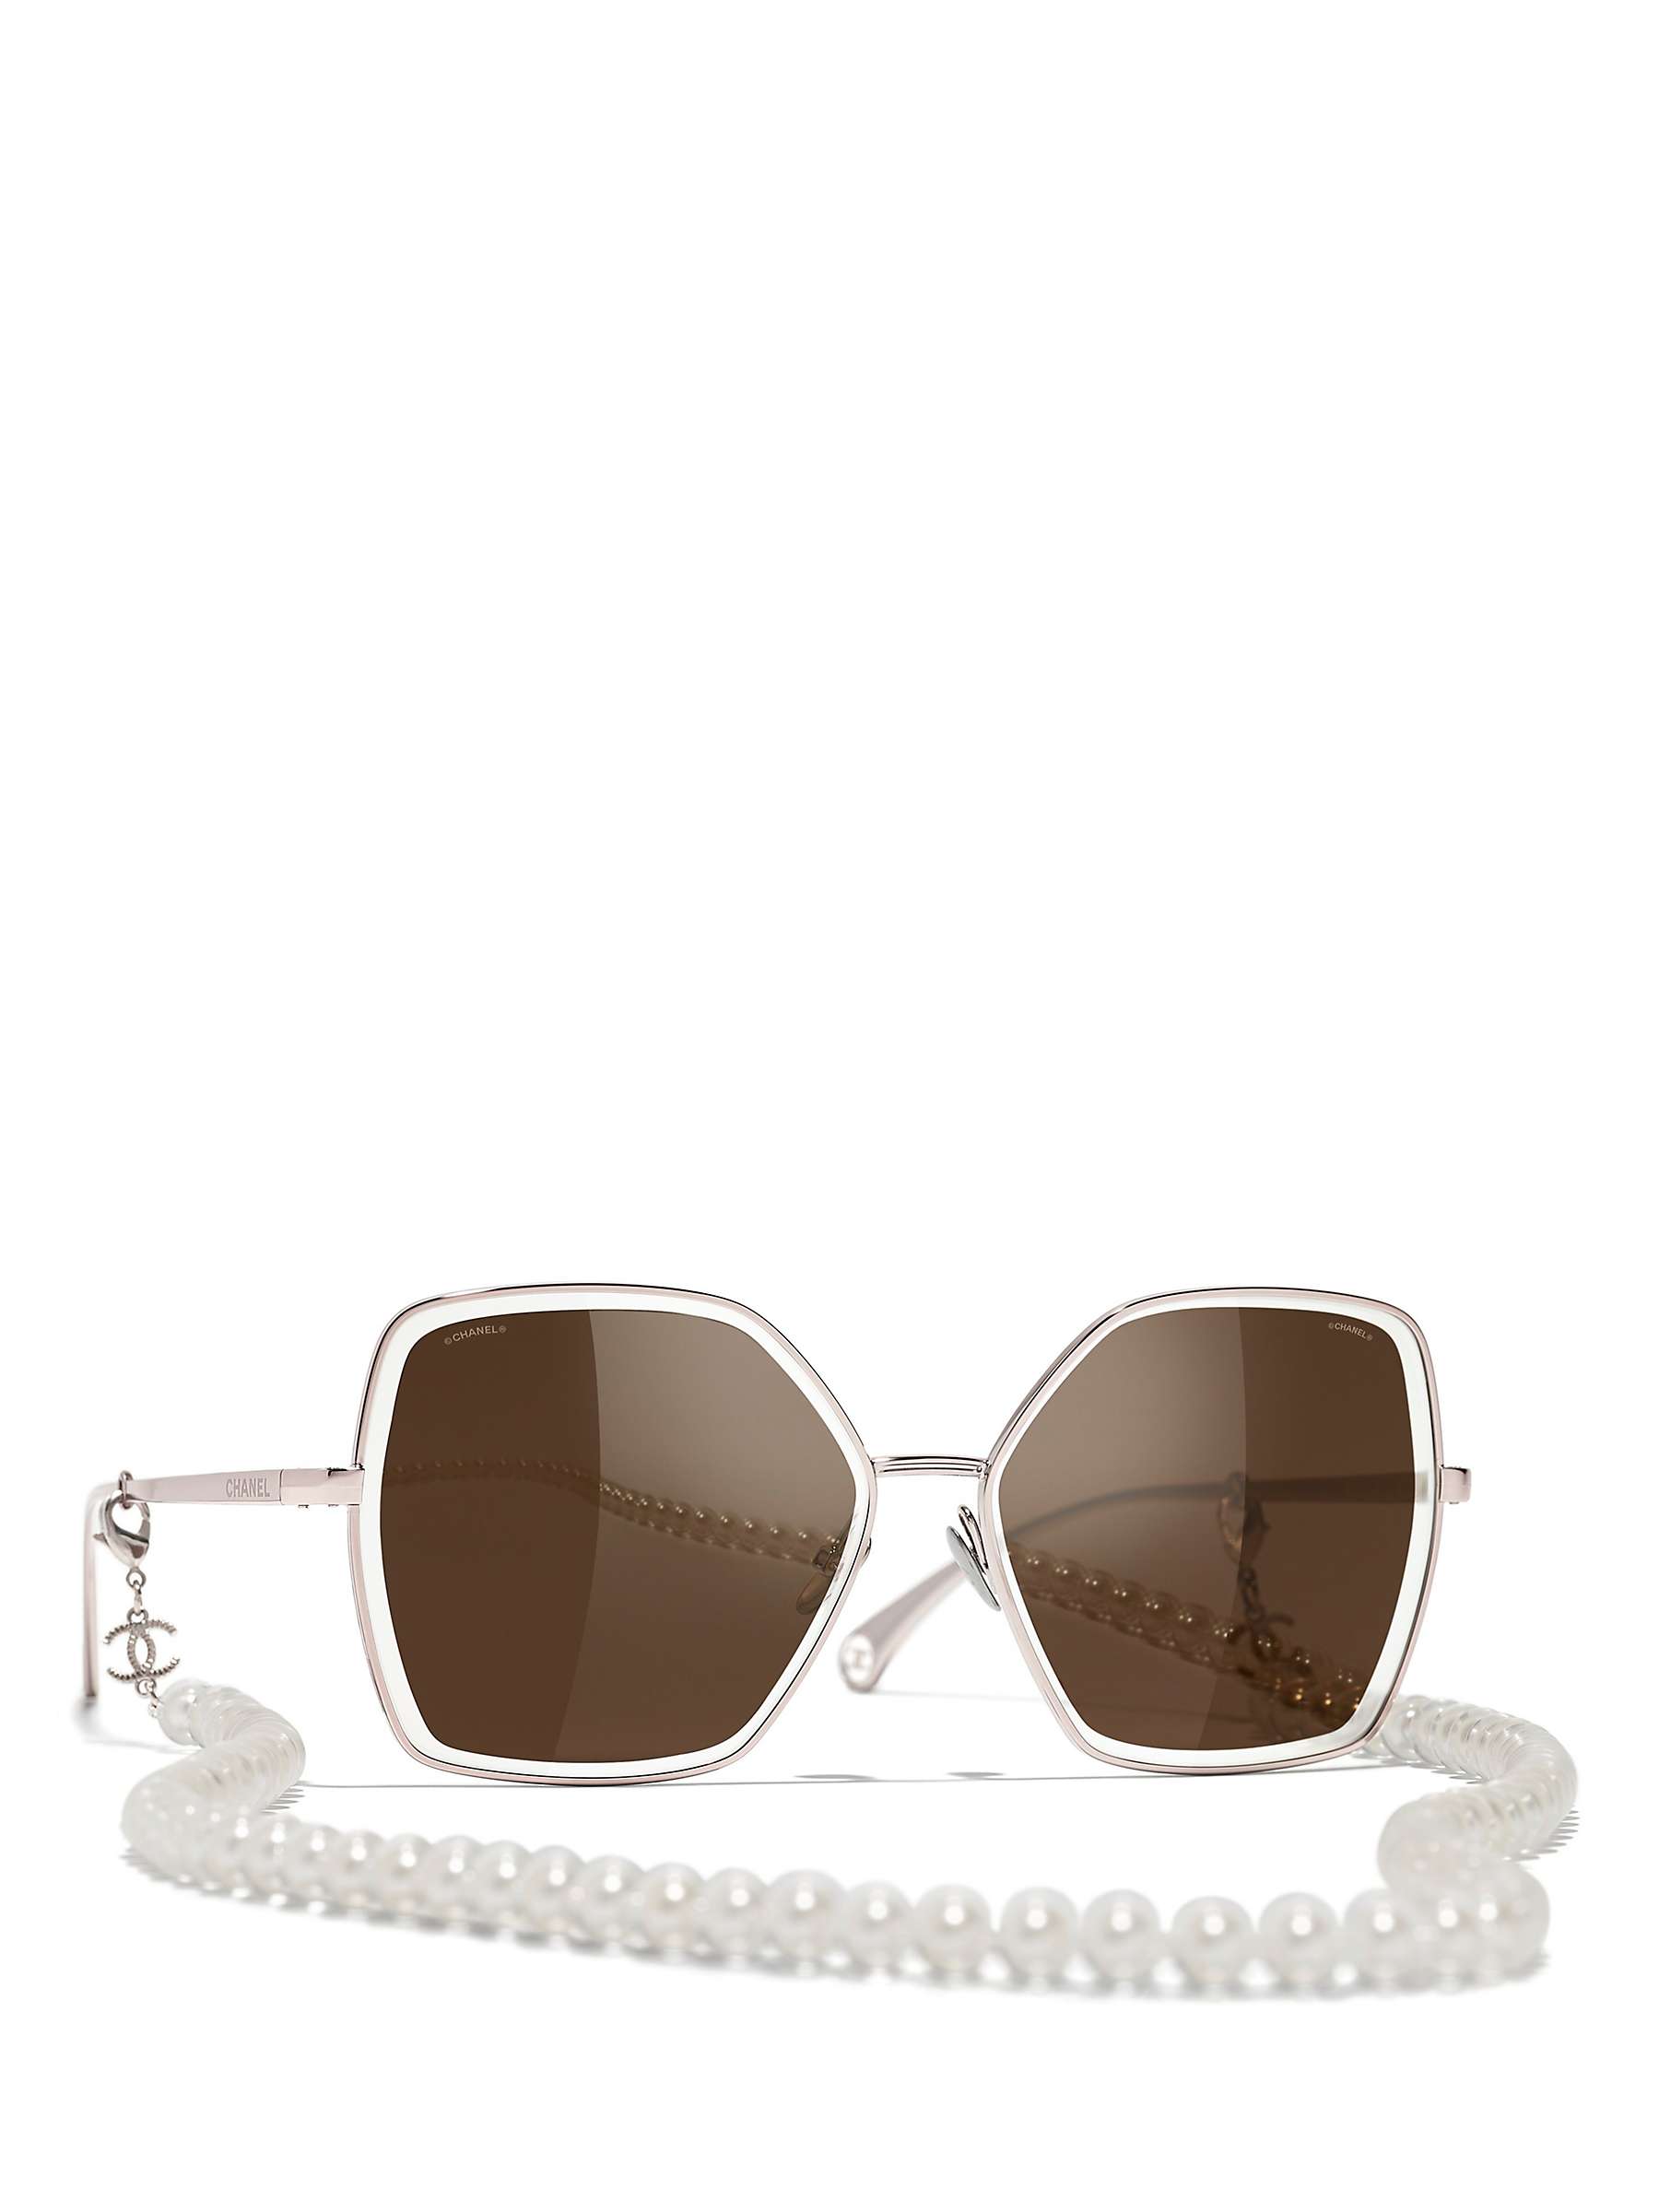 Buy CHANEL Pilot Sunglasses CH4262, Light Rose Gold/Dark Brown Online at johnlewis.com